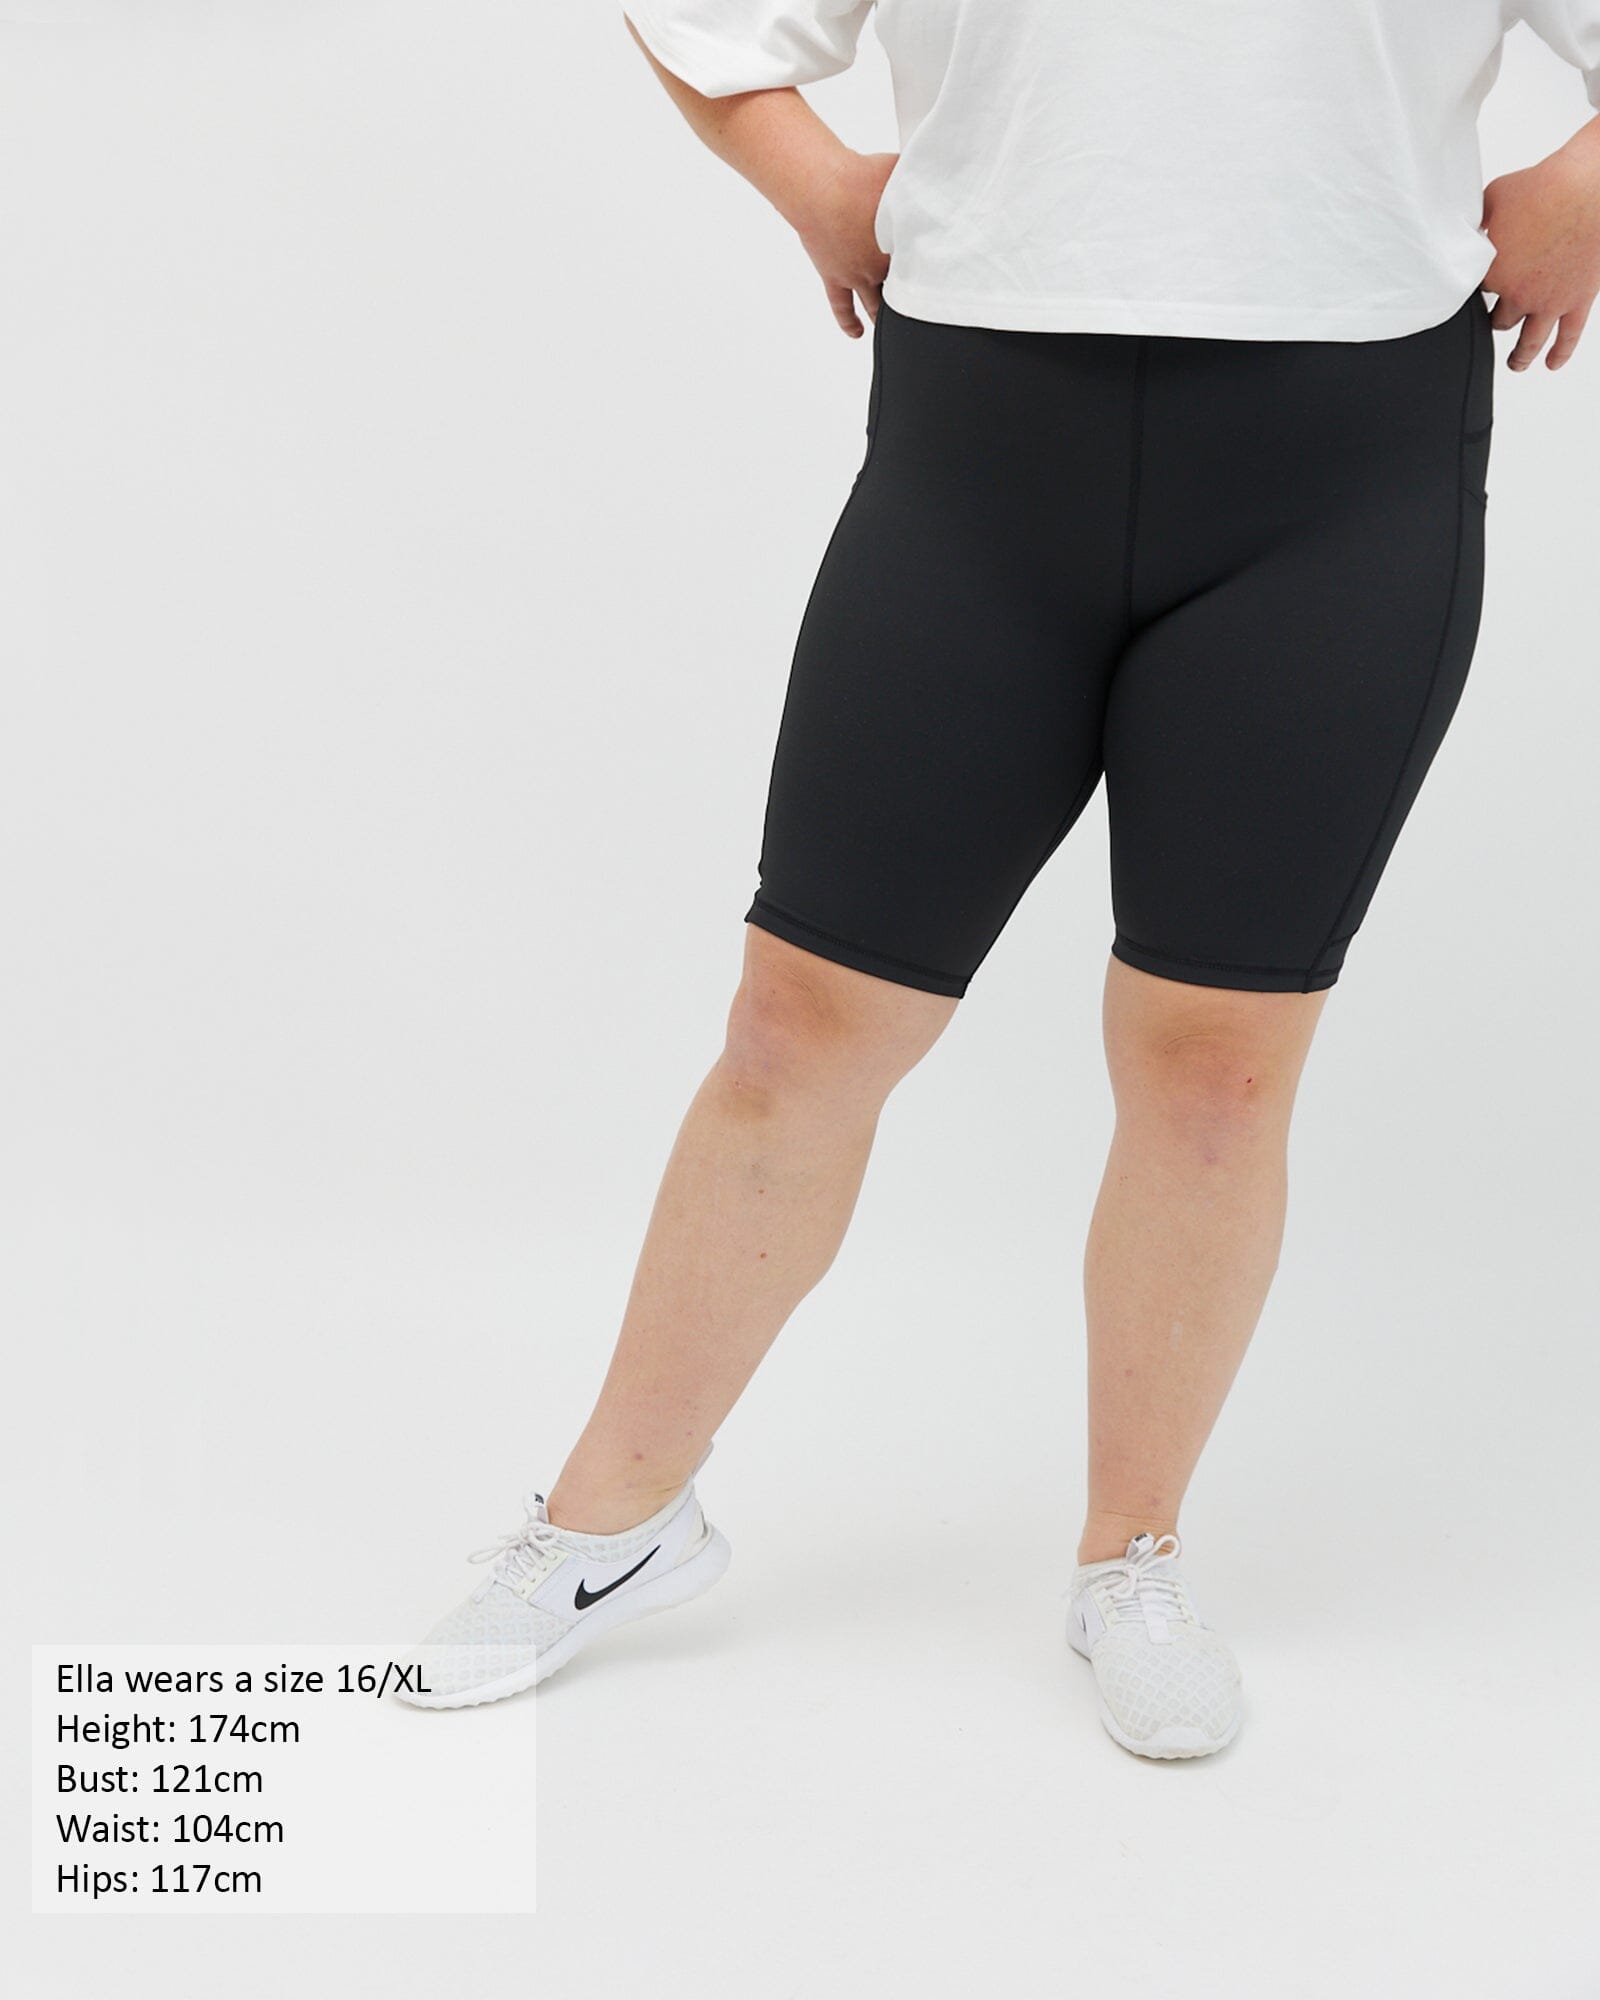 Active living bike shorts - 3 pocket - Black Leggings Avila the label 16/XL 